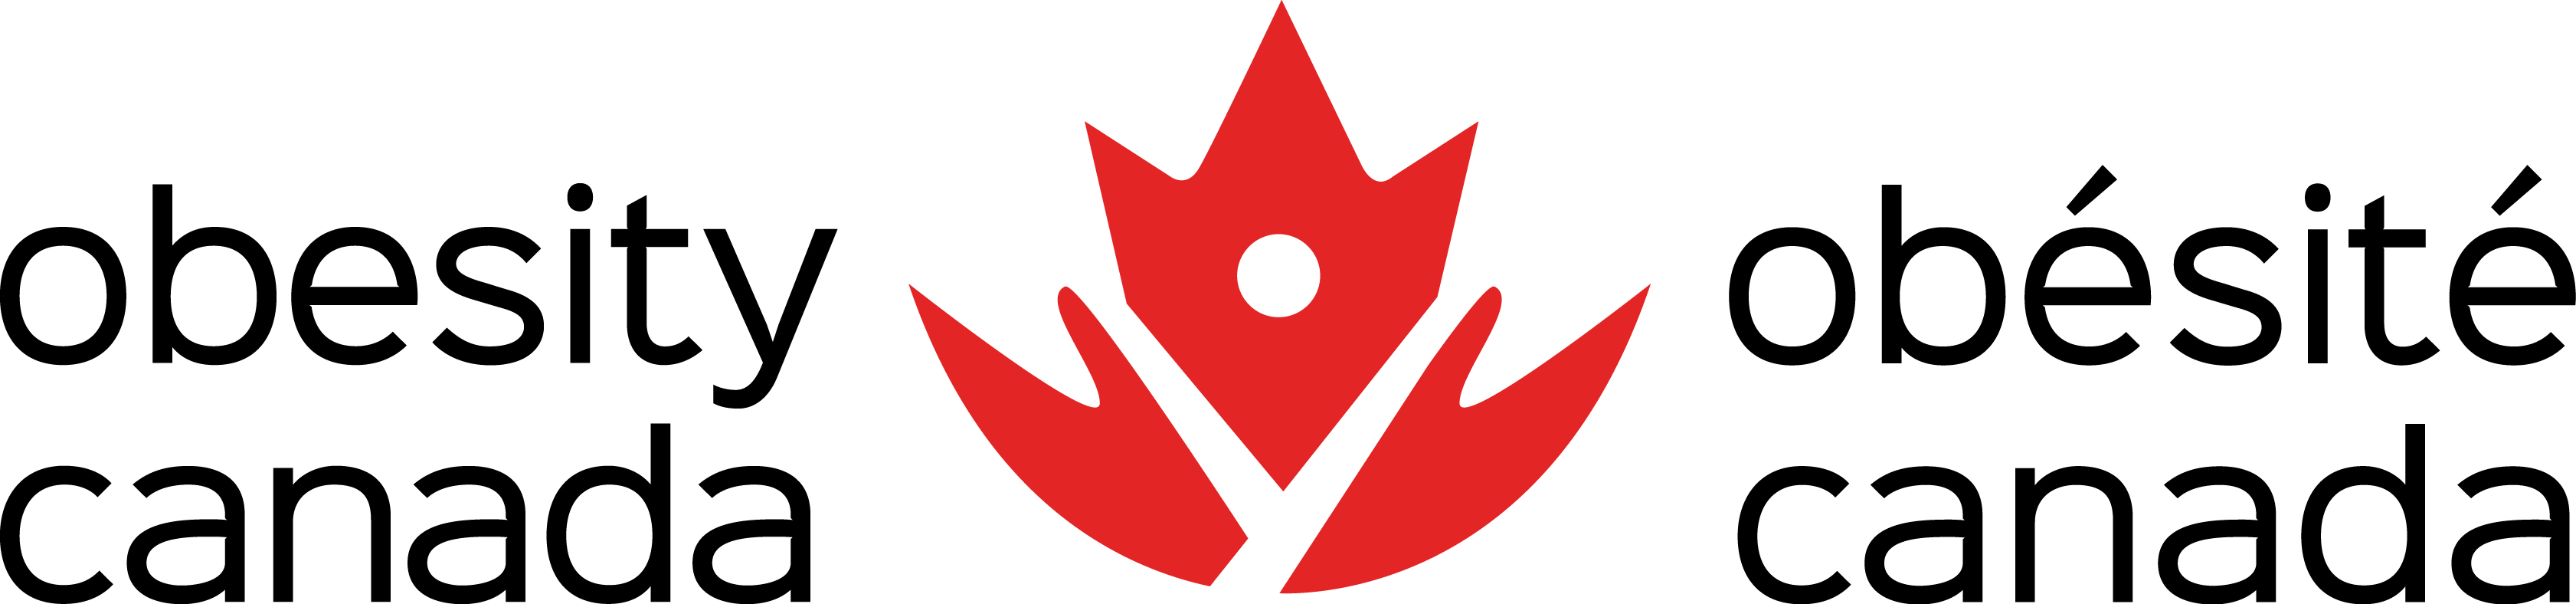 Obesity Canada - Obésité Canada (OC) logo